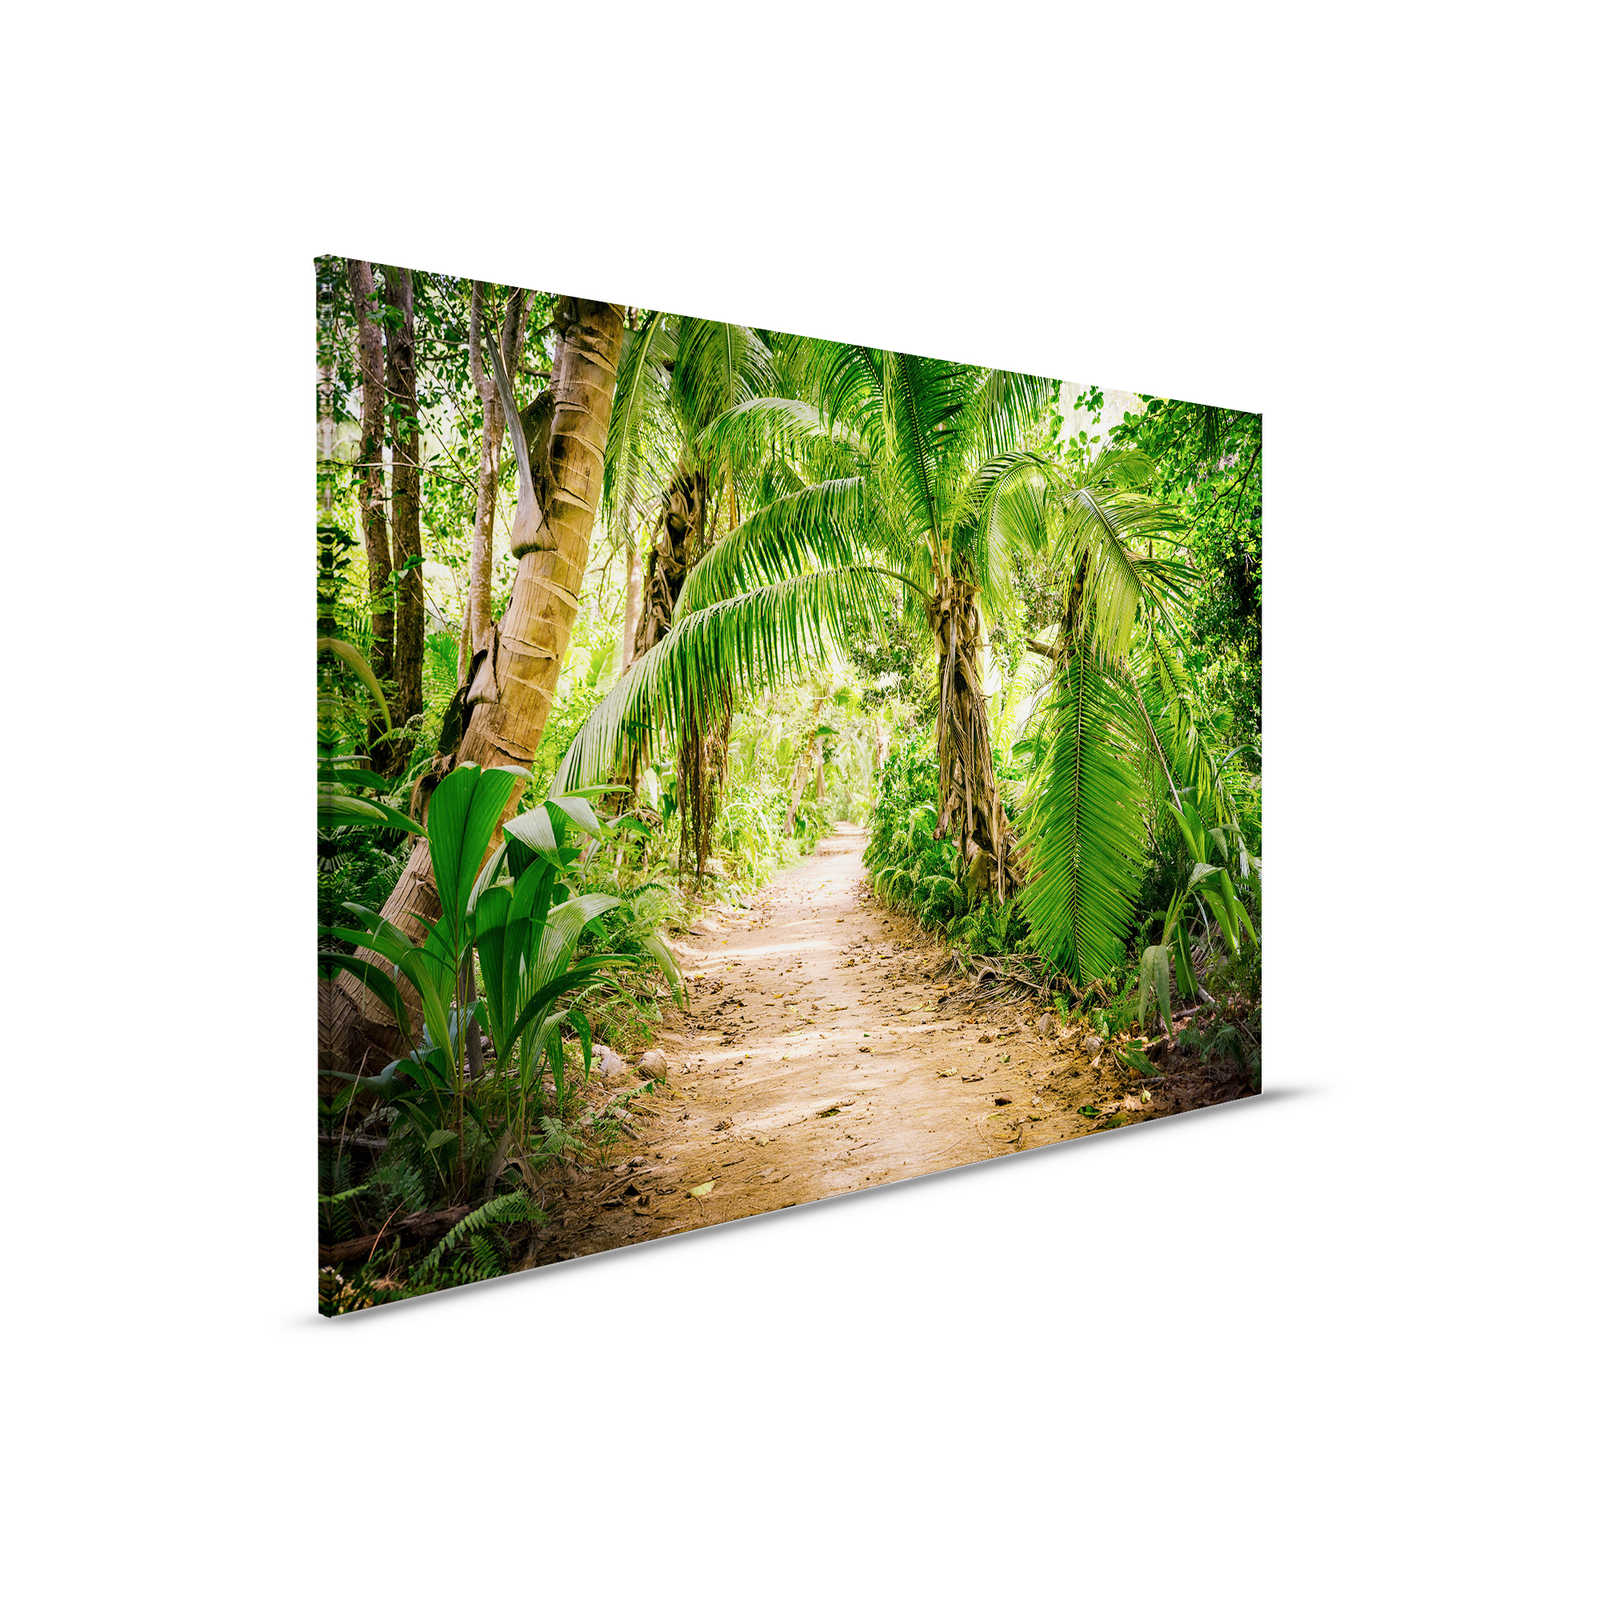         Canvas with palm tree path through a tropical landscape - 0.90 m x 0.60 m
    